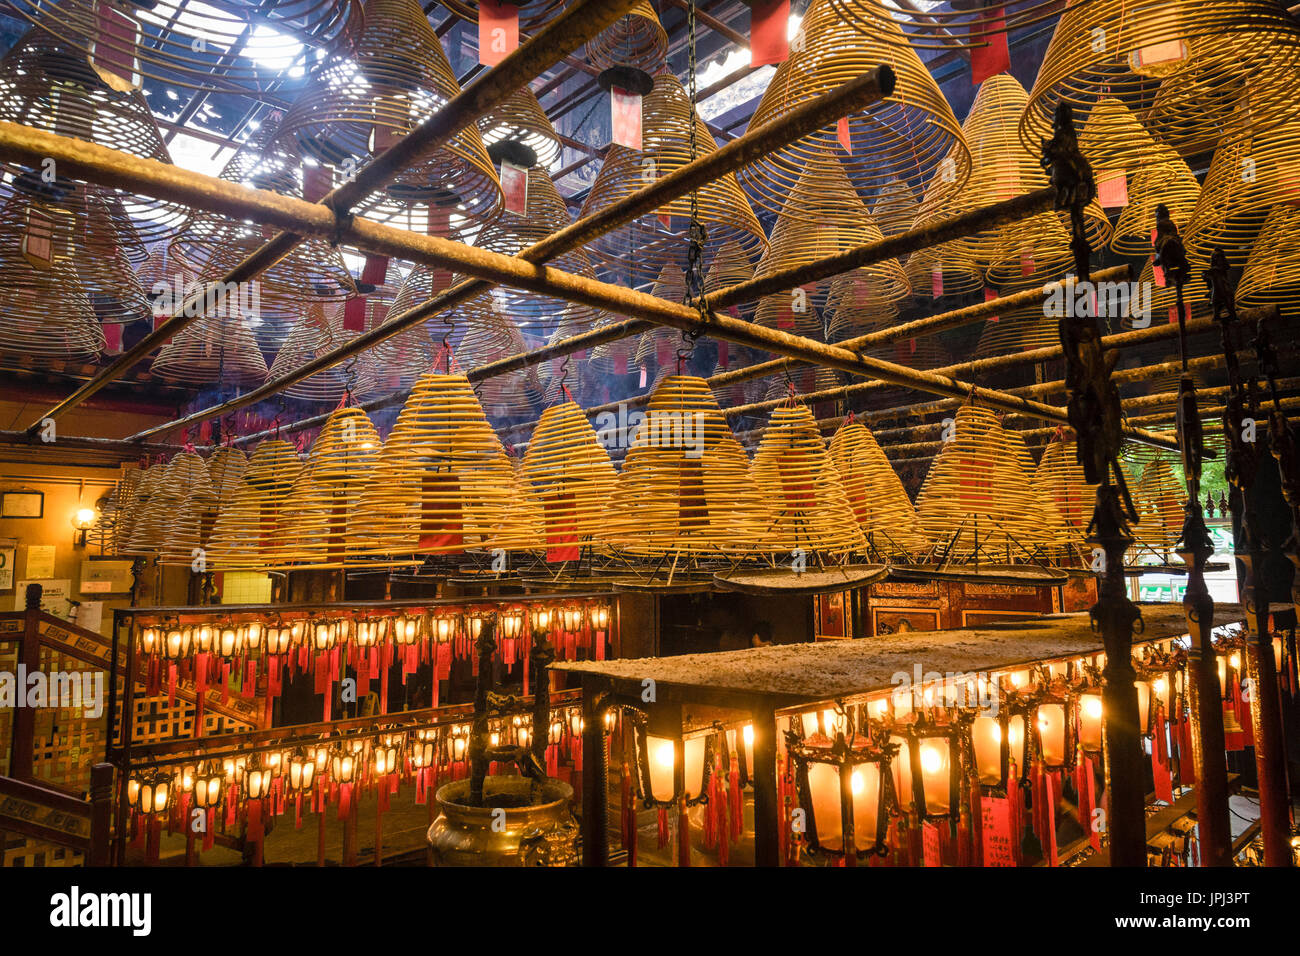 Linternas y quemar incienso bobinas dentro del templo de Man Mo en Hong Kong Foto de stock